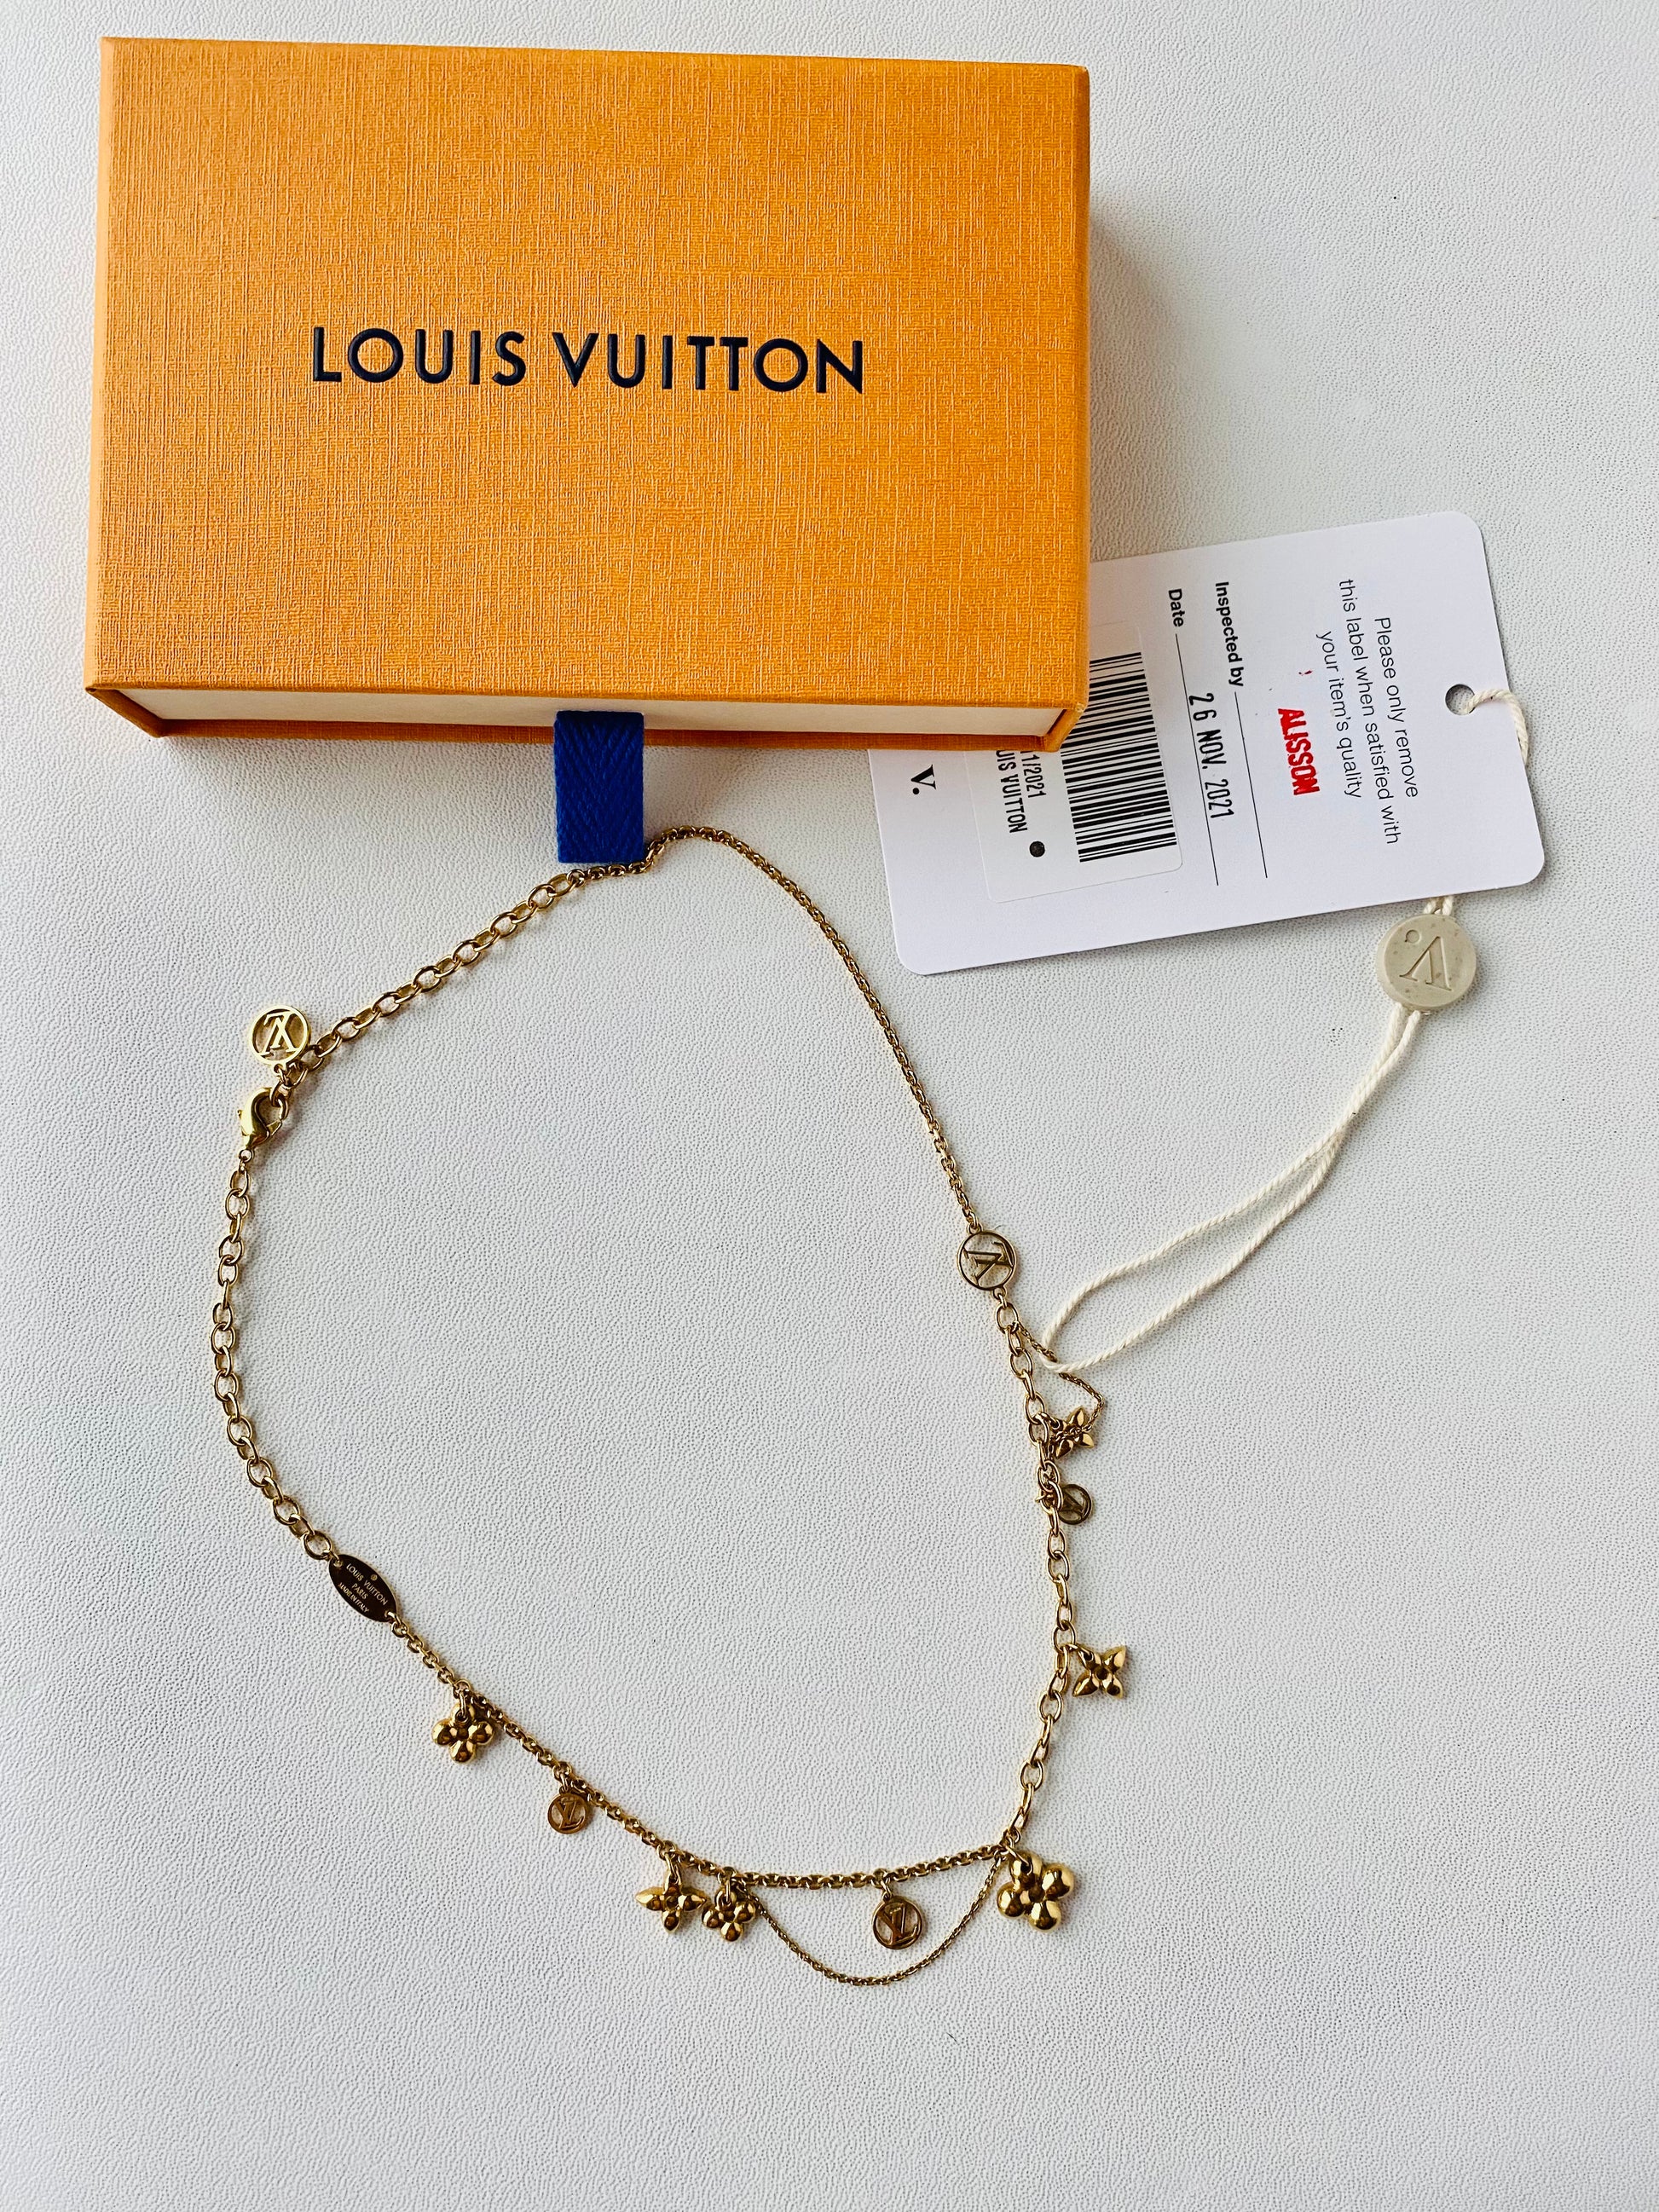 Repurposed Louis Vuitton Repurposed Louis Vuitton items